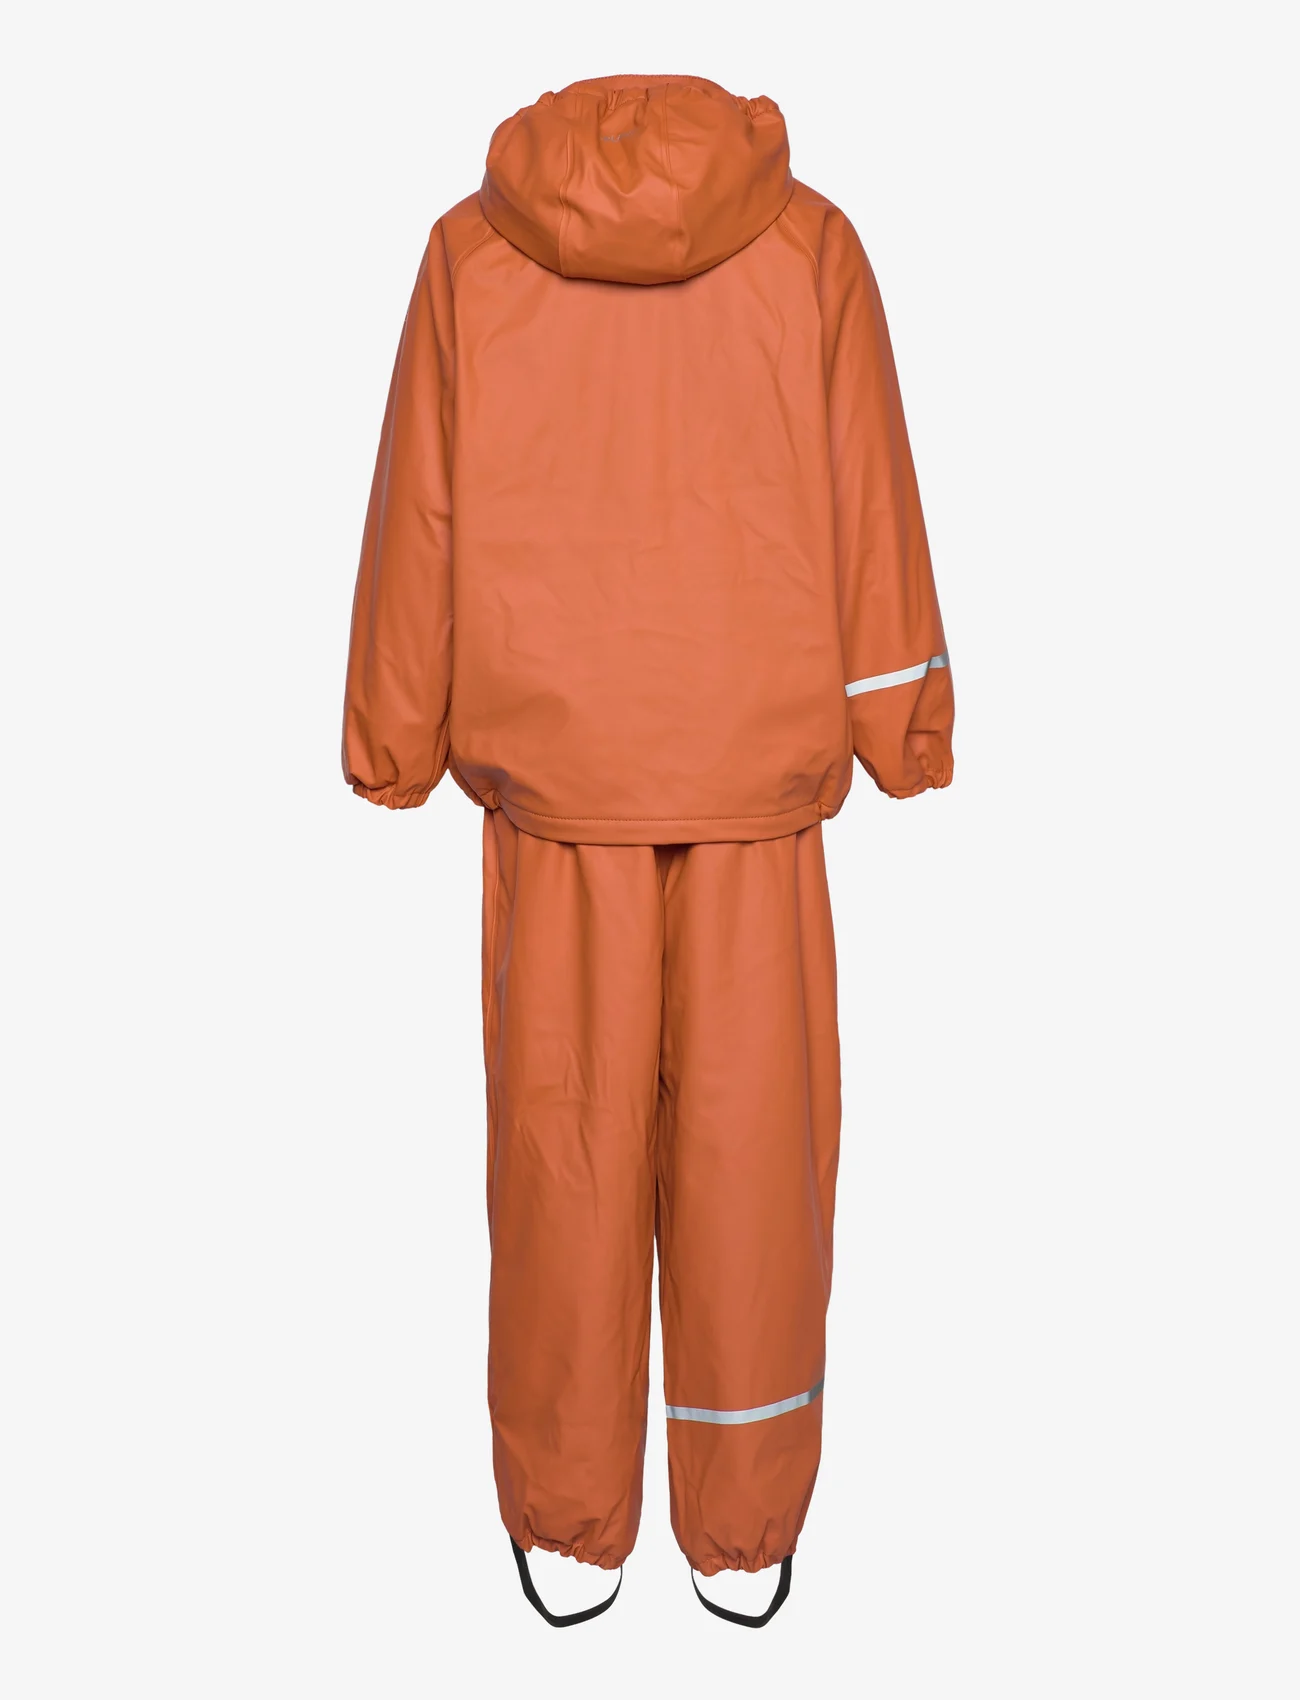 CeLaVi - Rainwear Set -Solid, w.fleece - talvihaalari - amber brown - 1